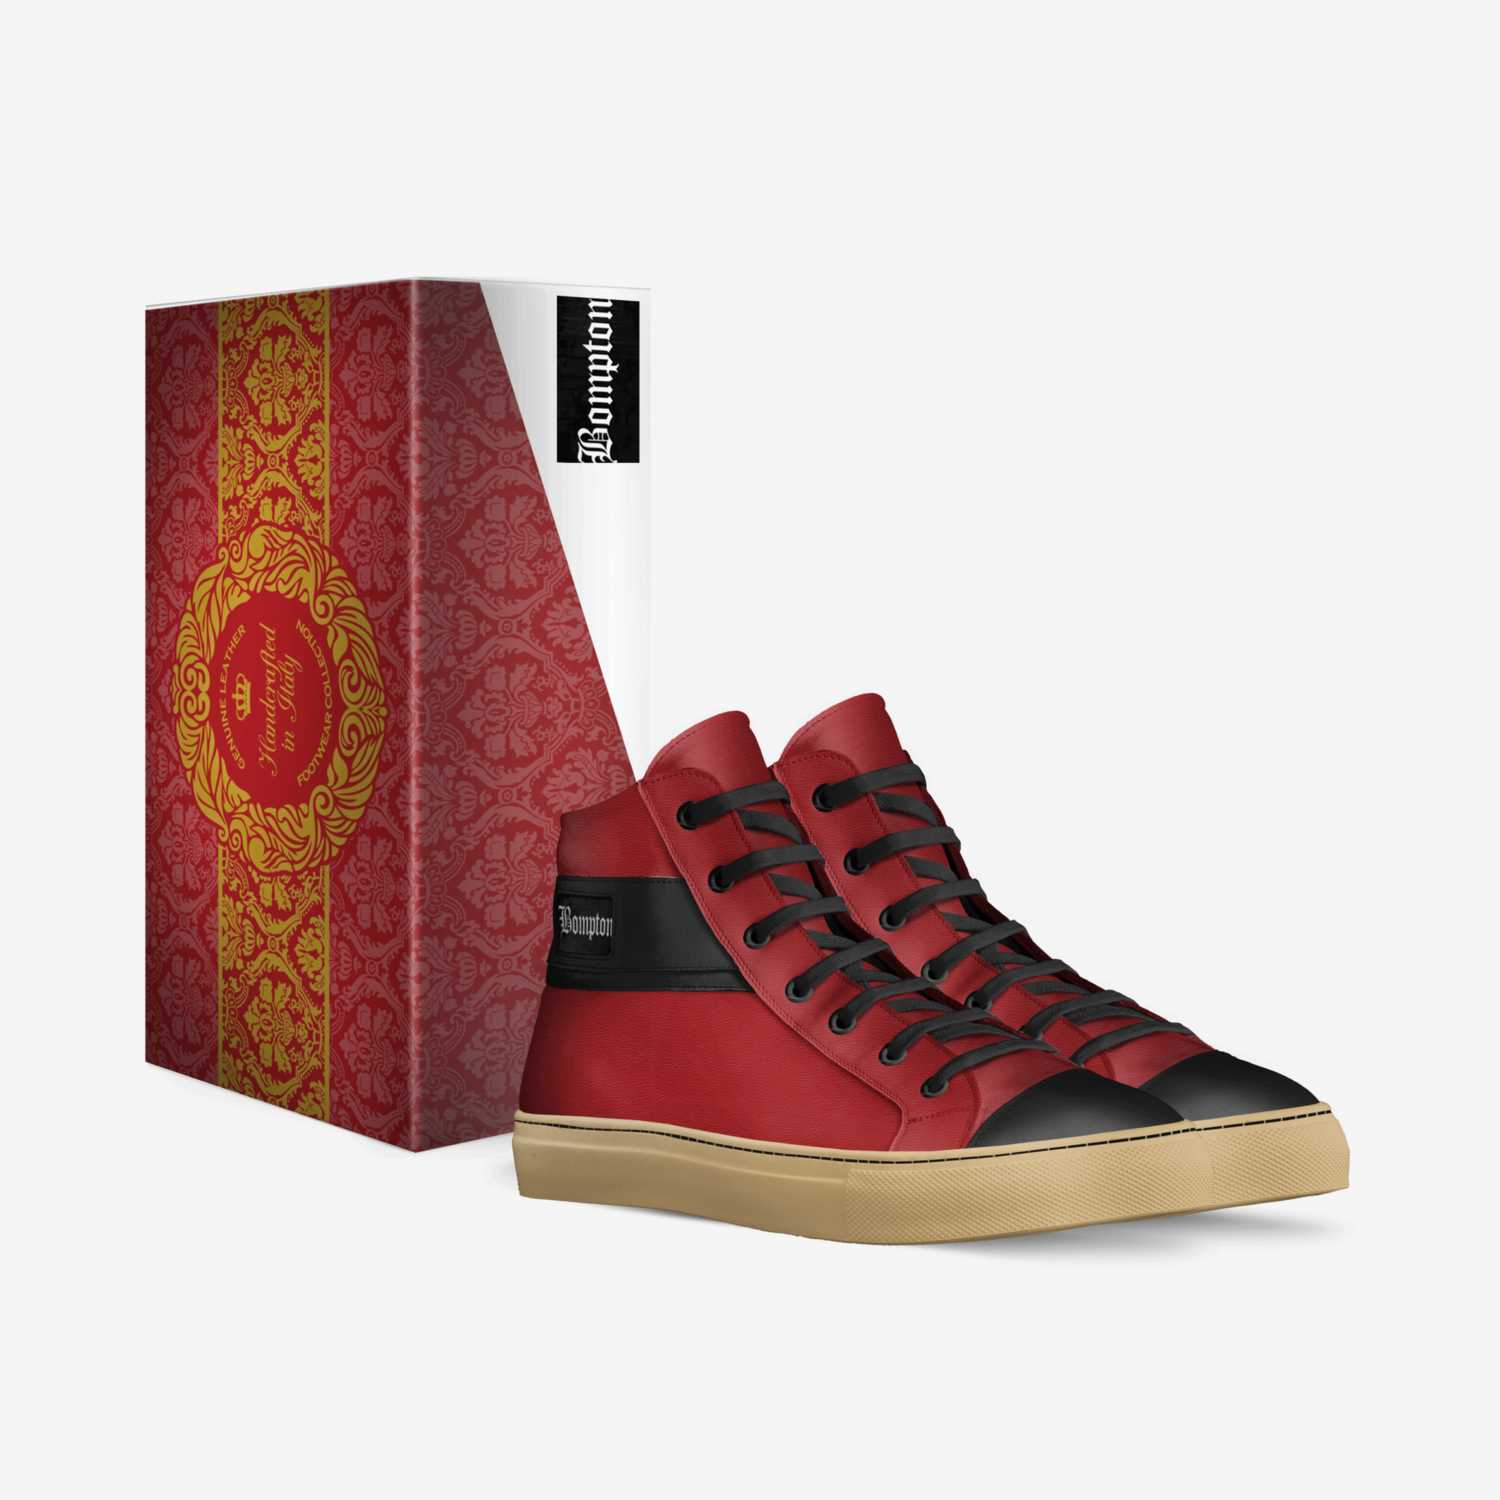 Sharingan custom made in Italy shoes by Eduardo | Box view